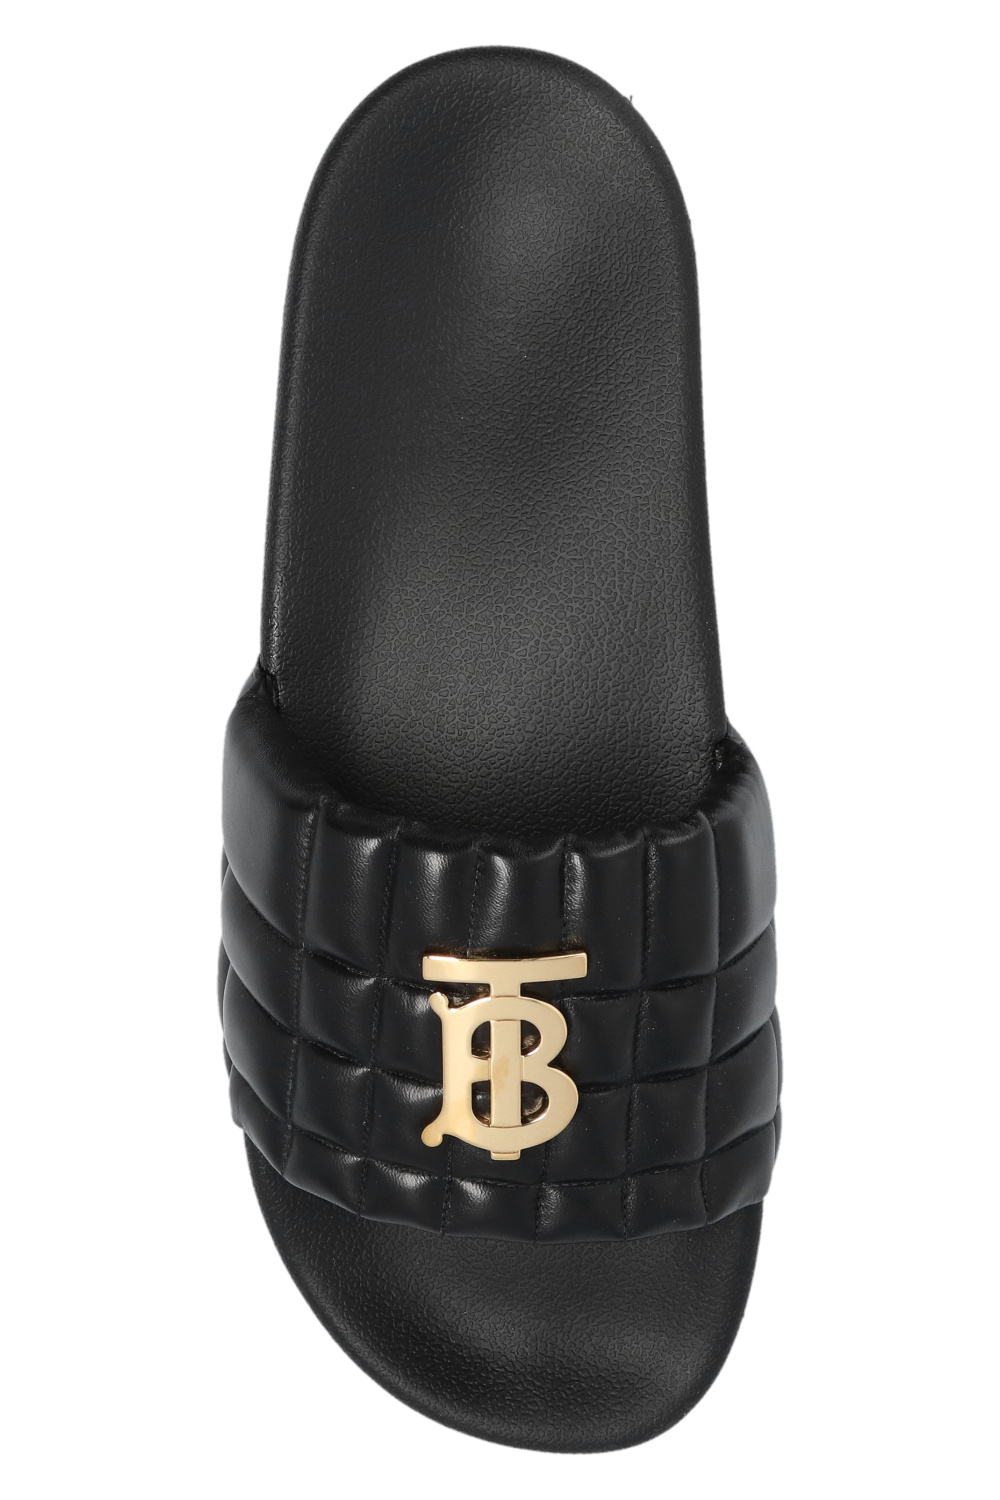 $80 LV Slides Sz 45 $80 Burberry Slides Sz 44 $100 Supreme Black Bag -  Available In Store Now - DM To Reserve - Open Till 8PM